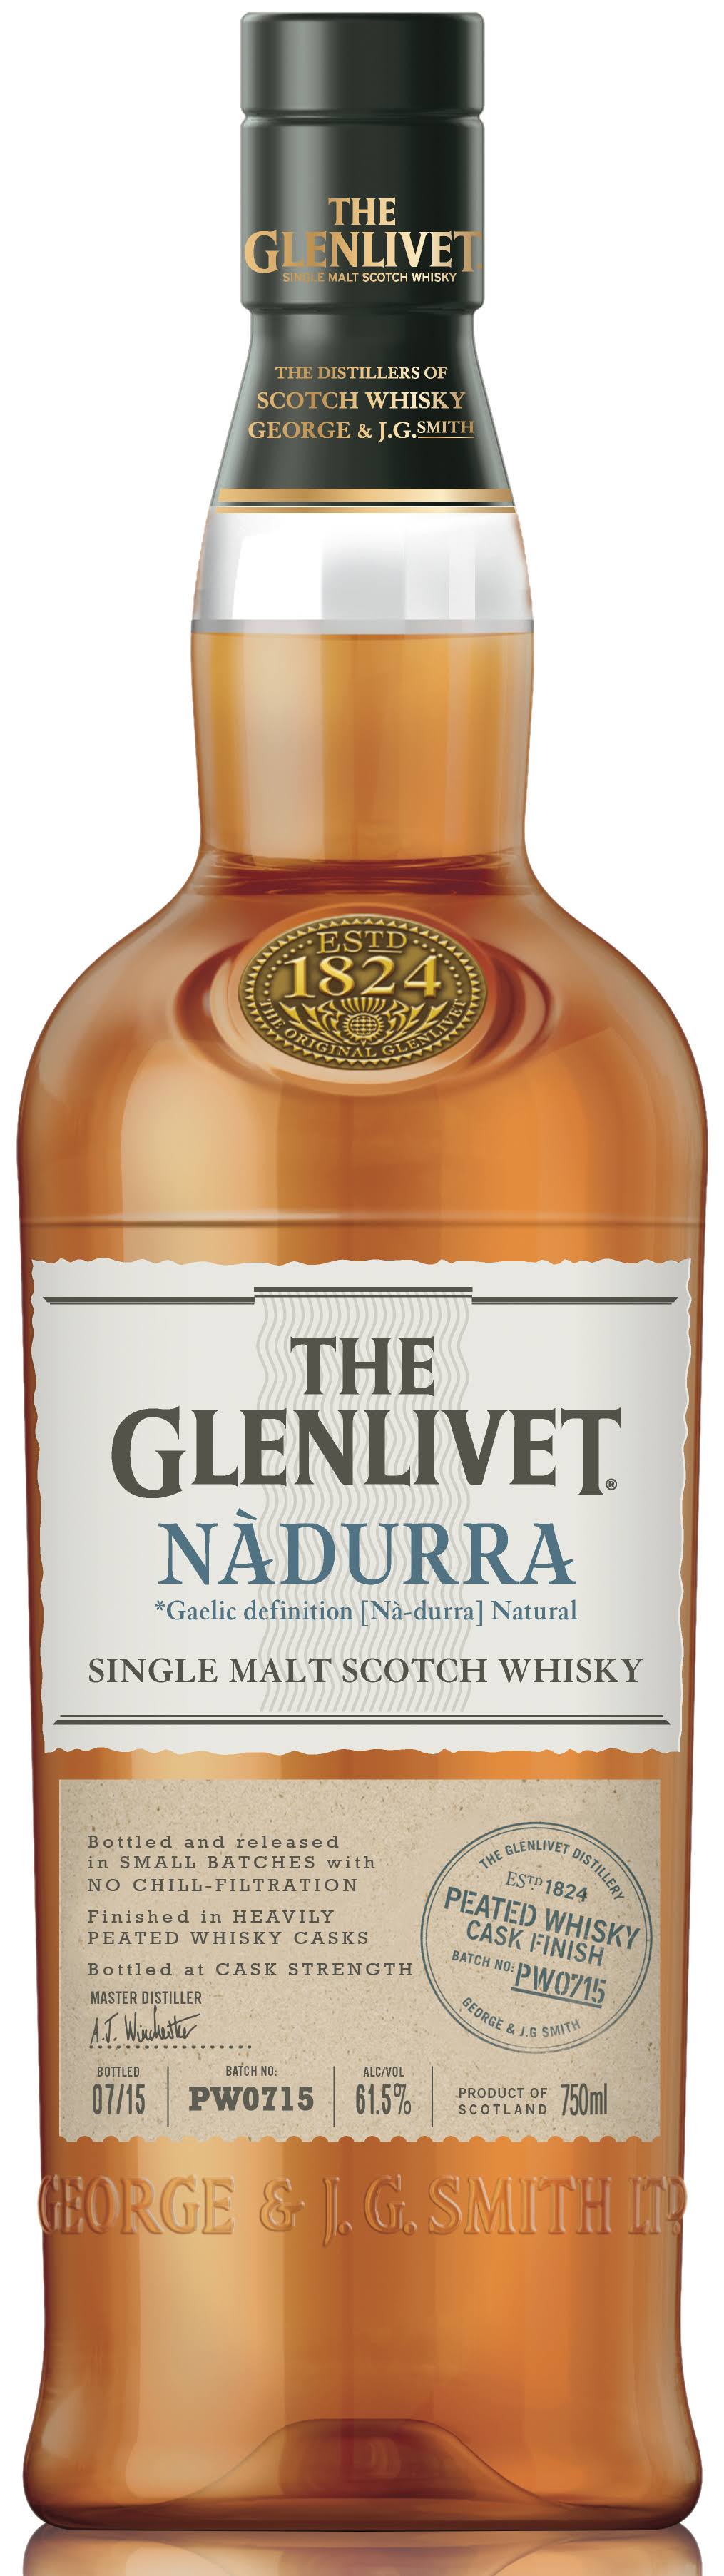 The Glenlivet Nadurra Single Malt Scotch Whisky - 750 ml bottle